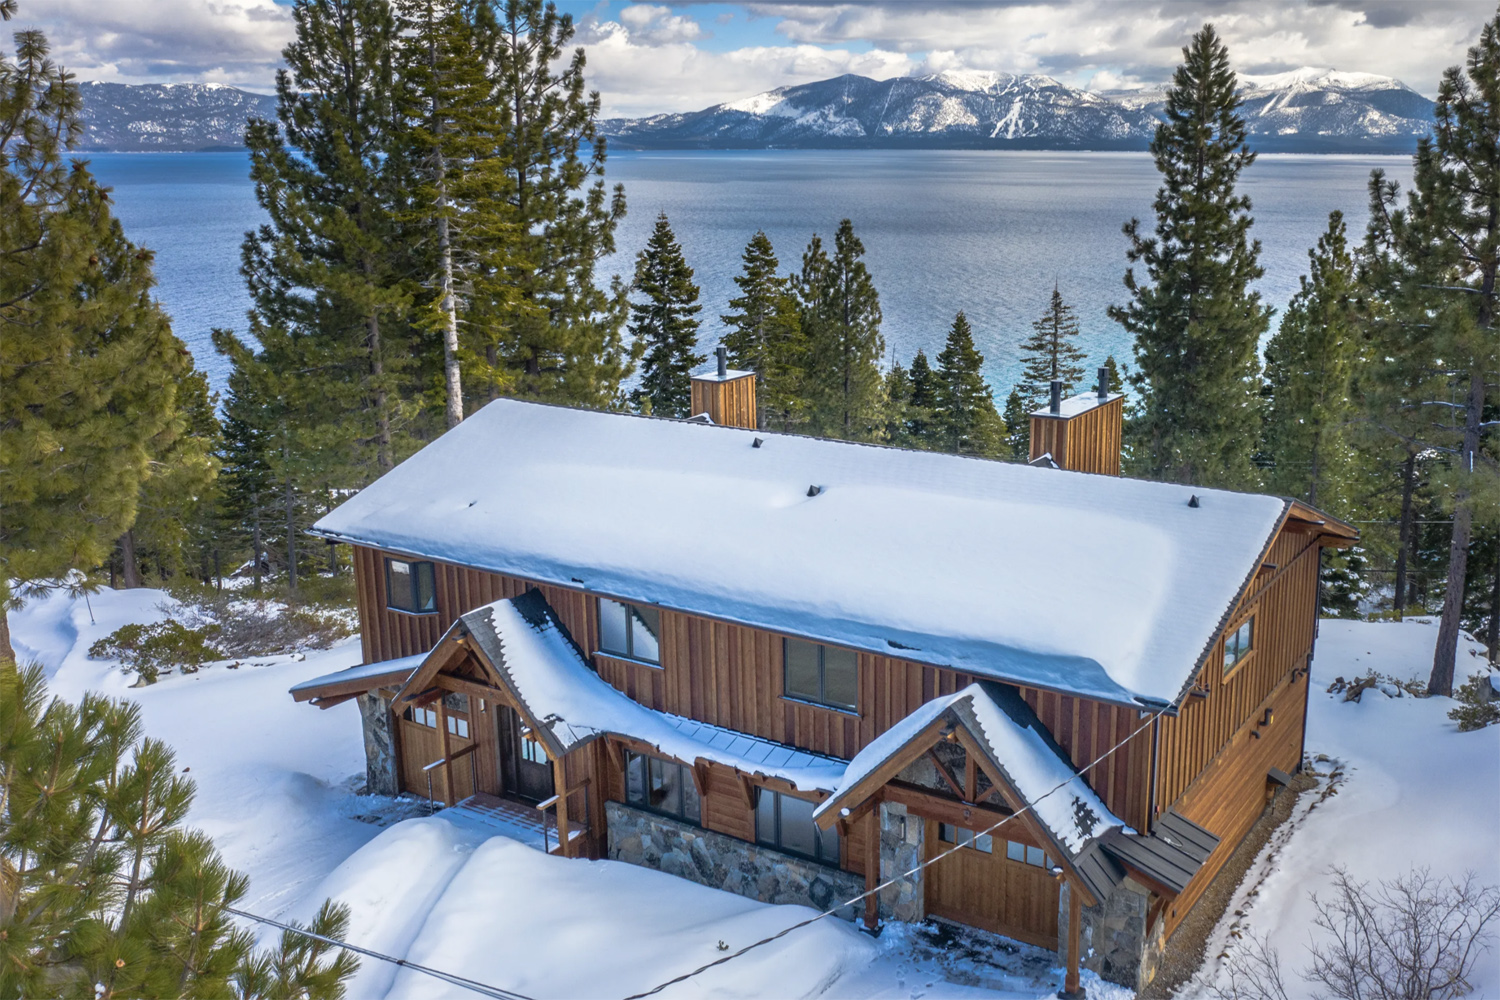 Pacaso luxury vacation home in Lake Tahoe, CA